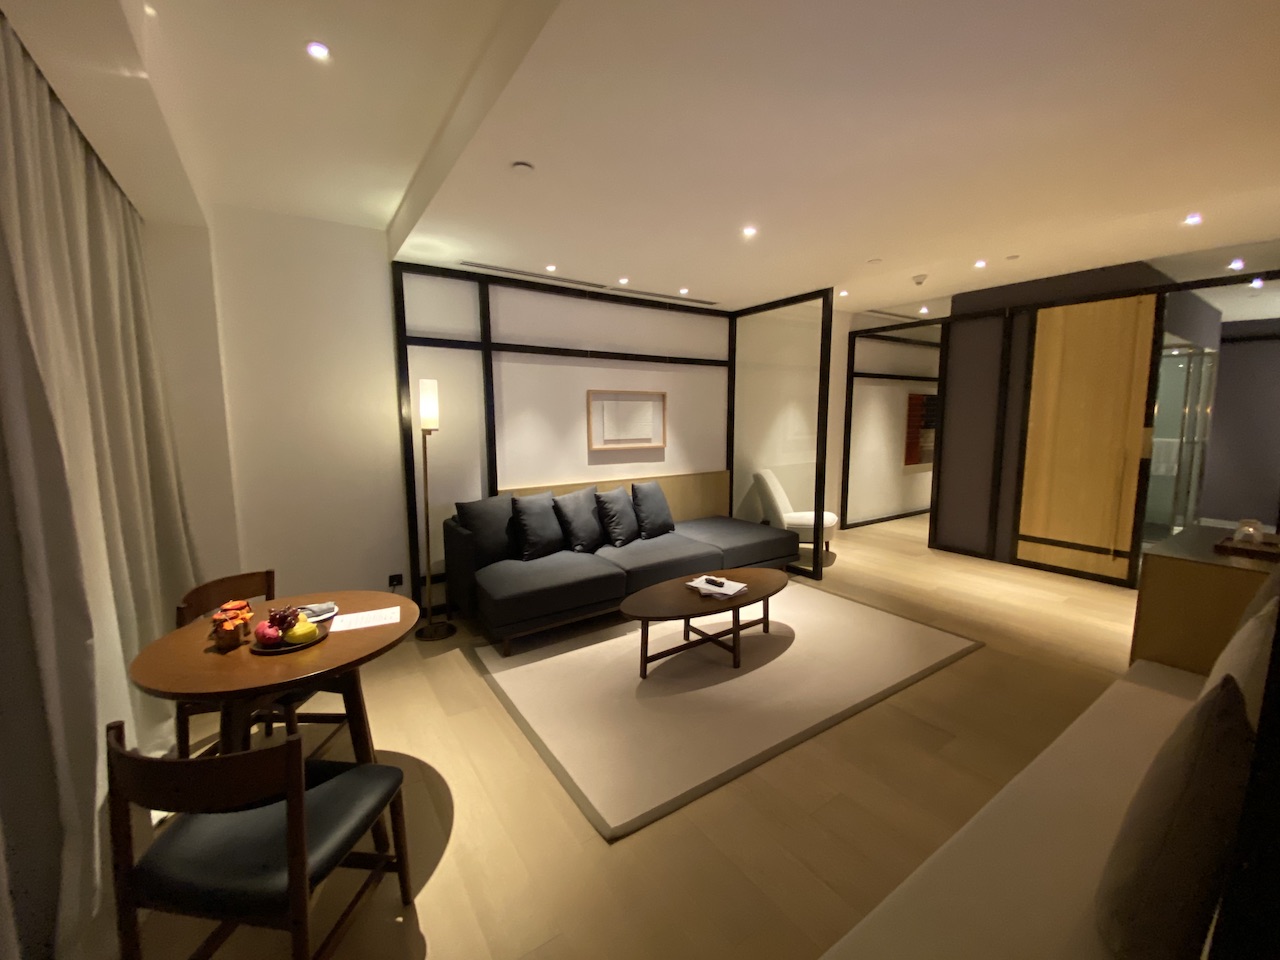 Bangsar suite living room from bedroom